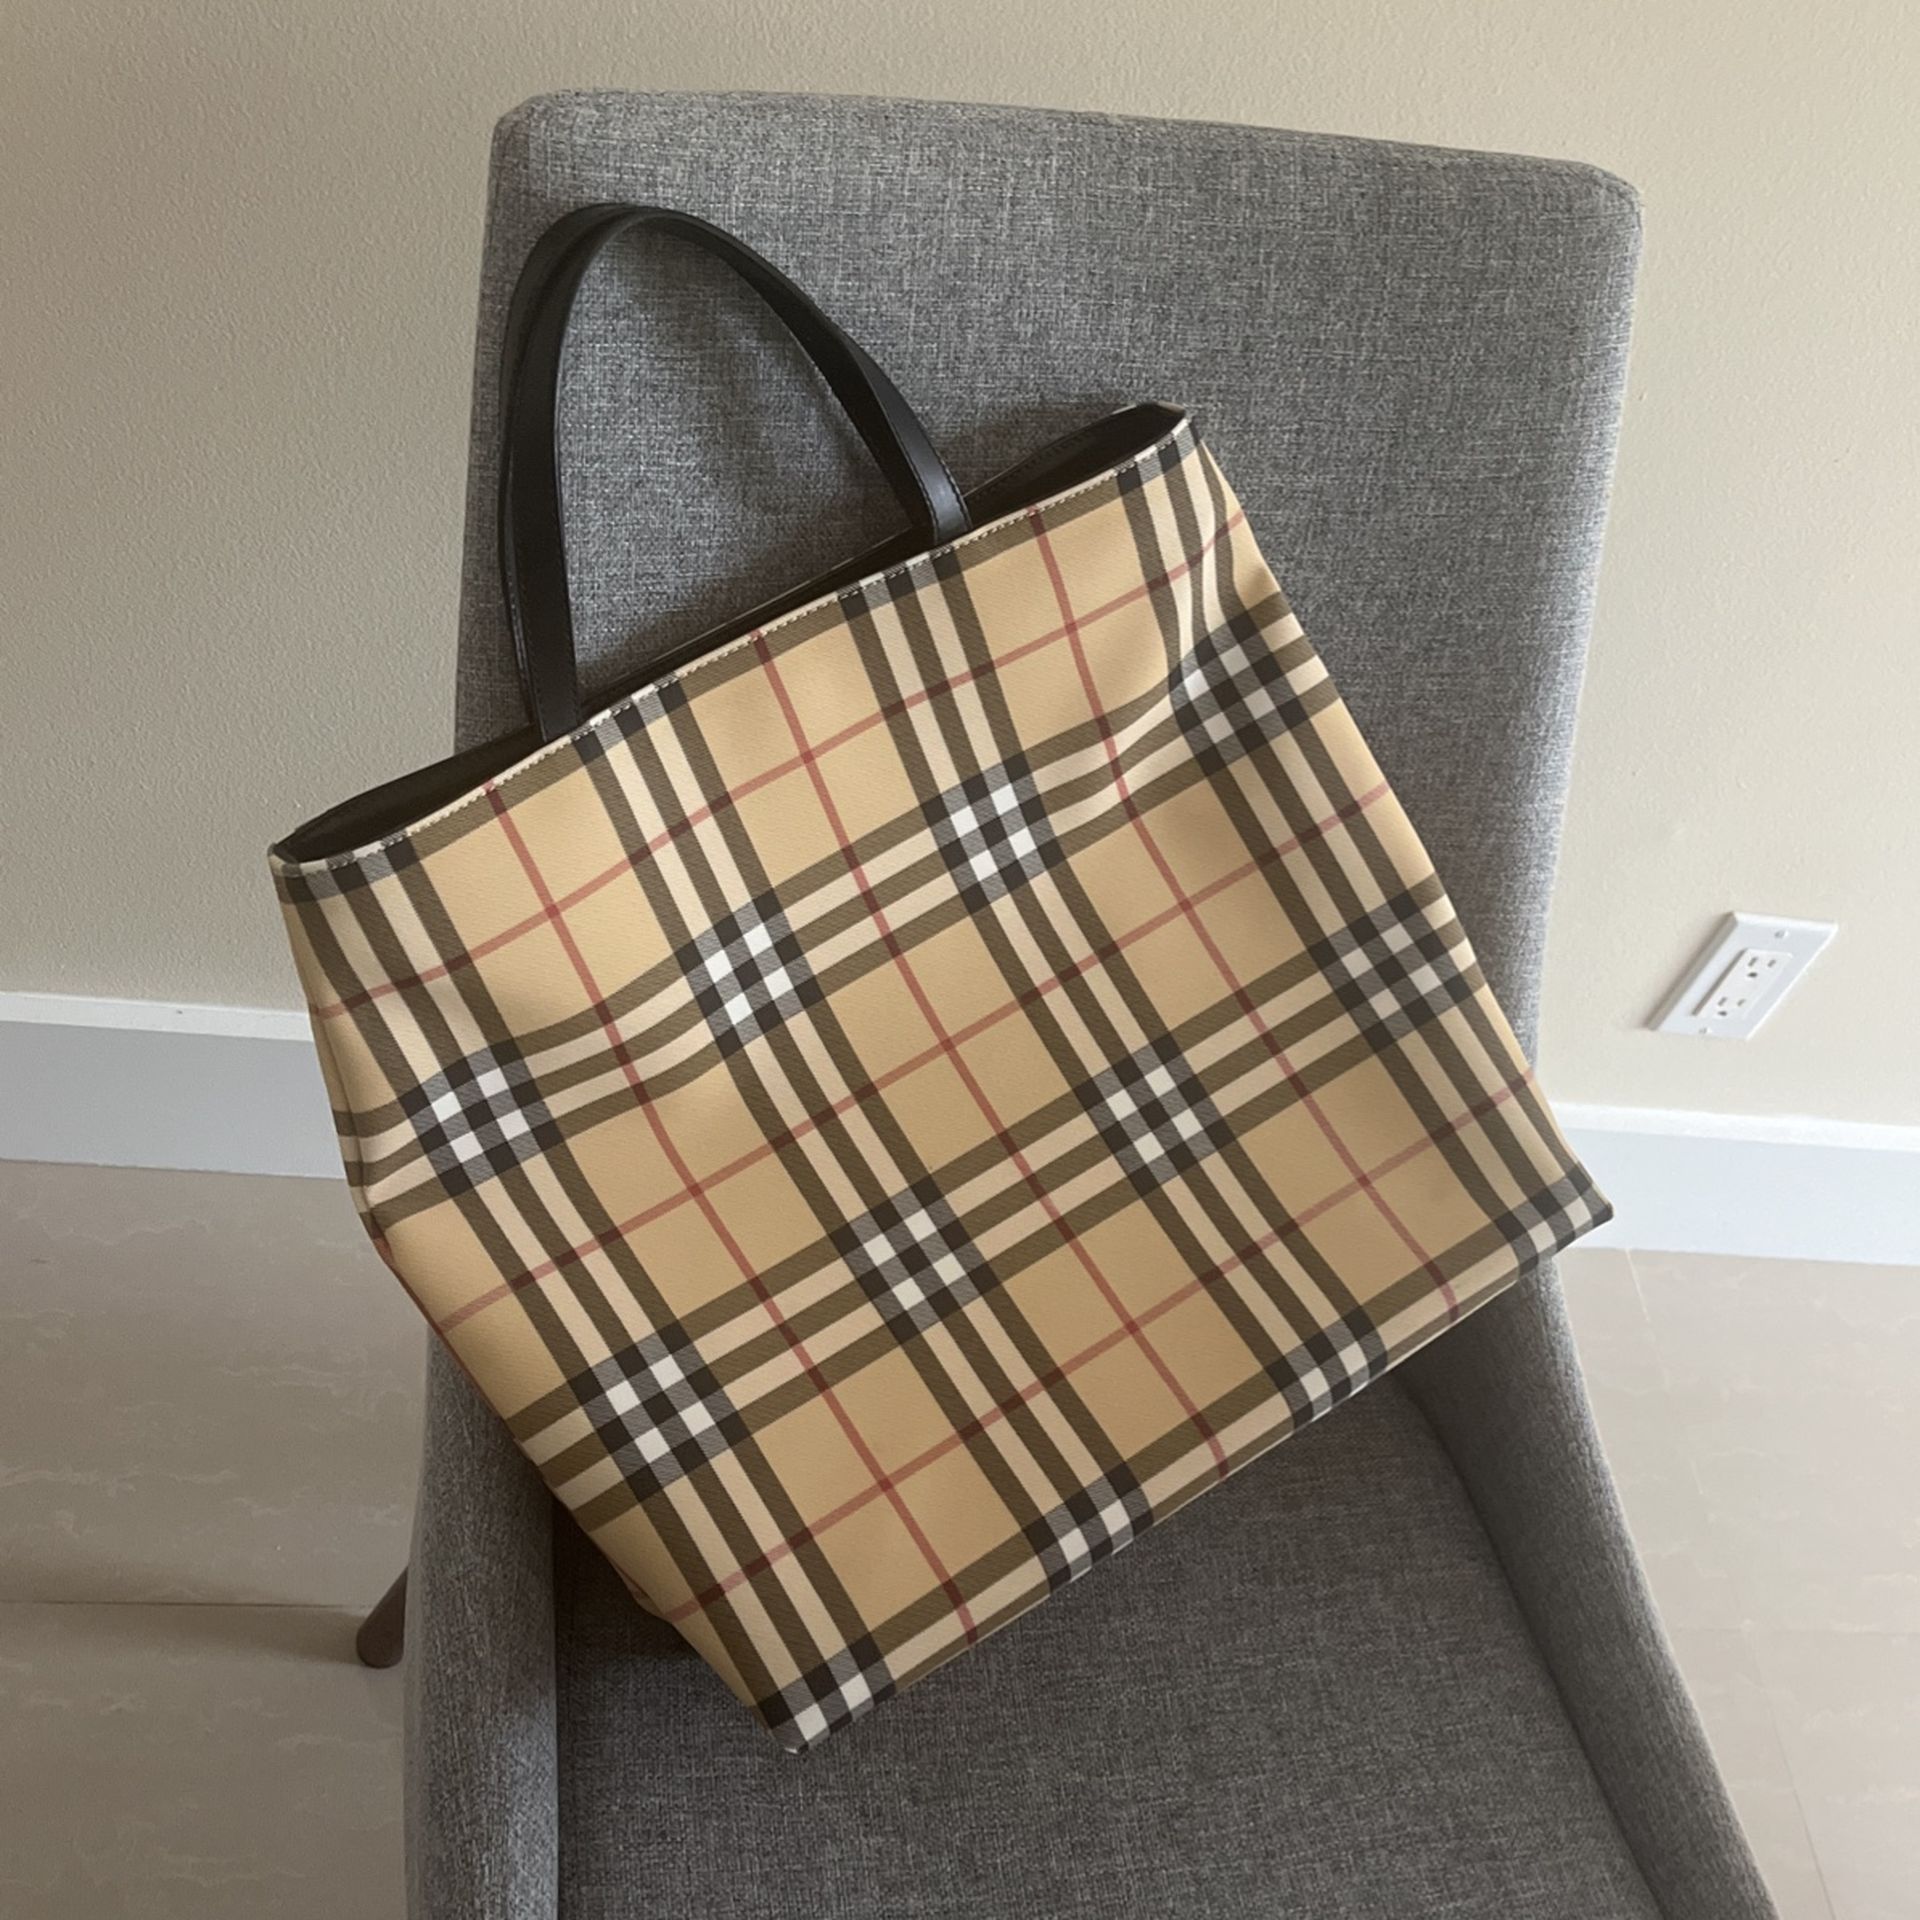 Beautiful Burberry Tote Handbag Original with Certificate Of Authenticity 